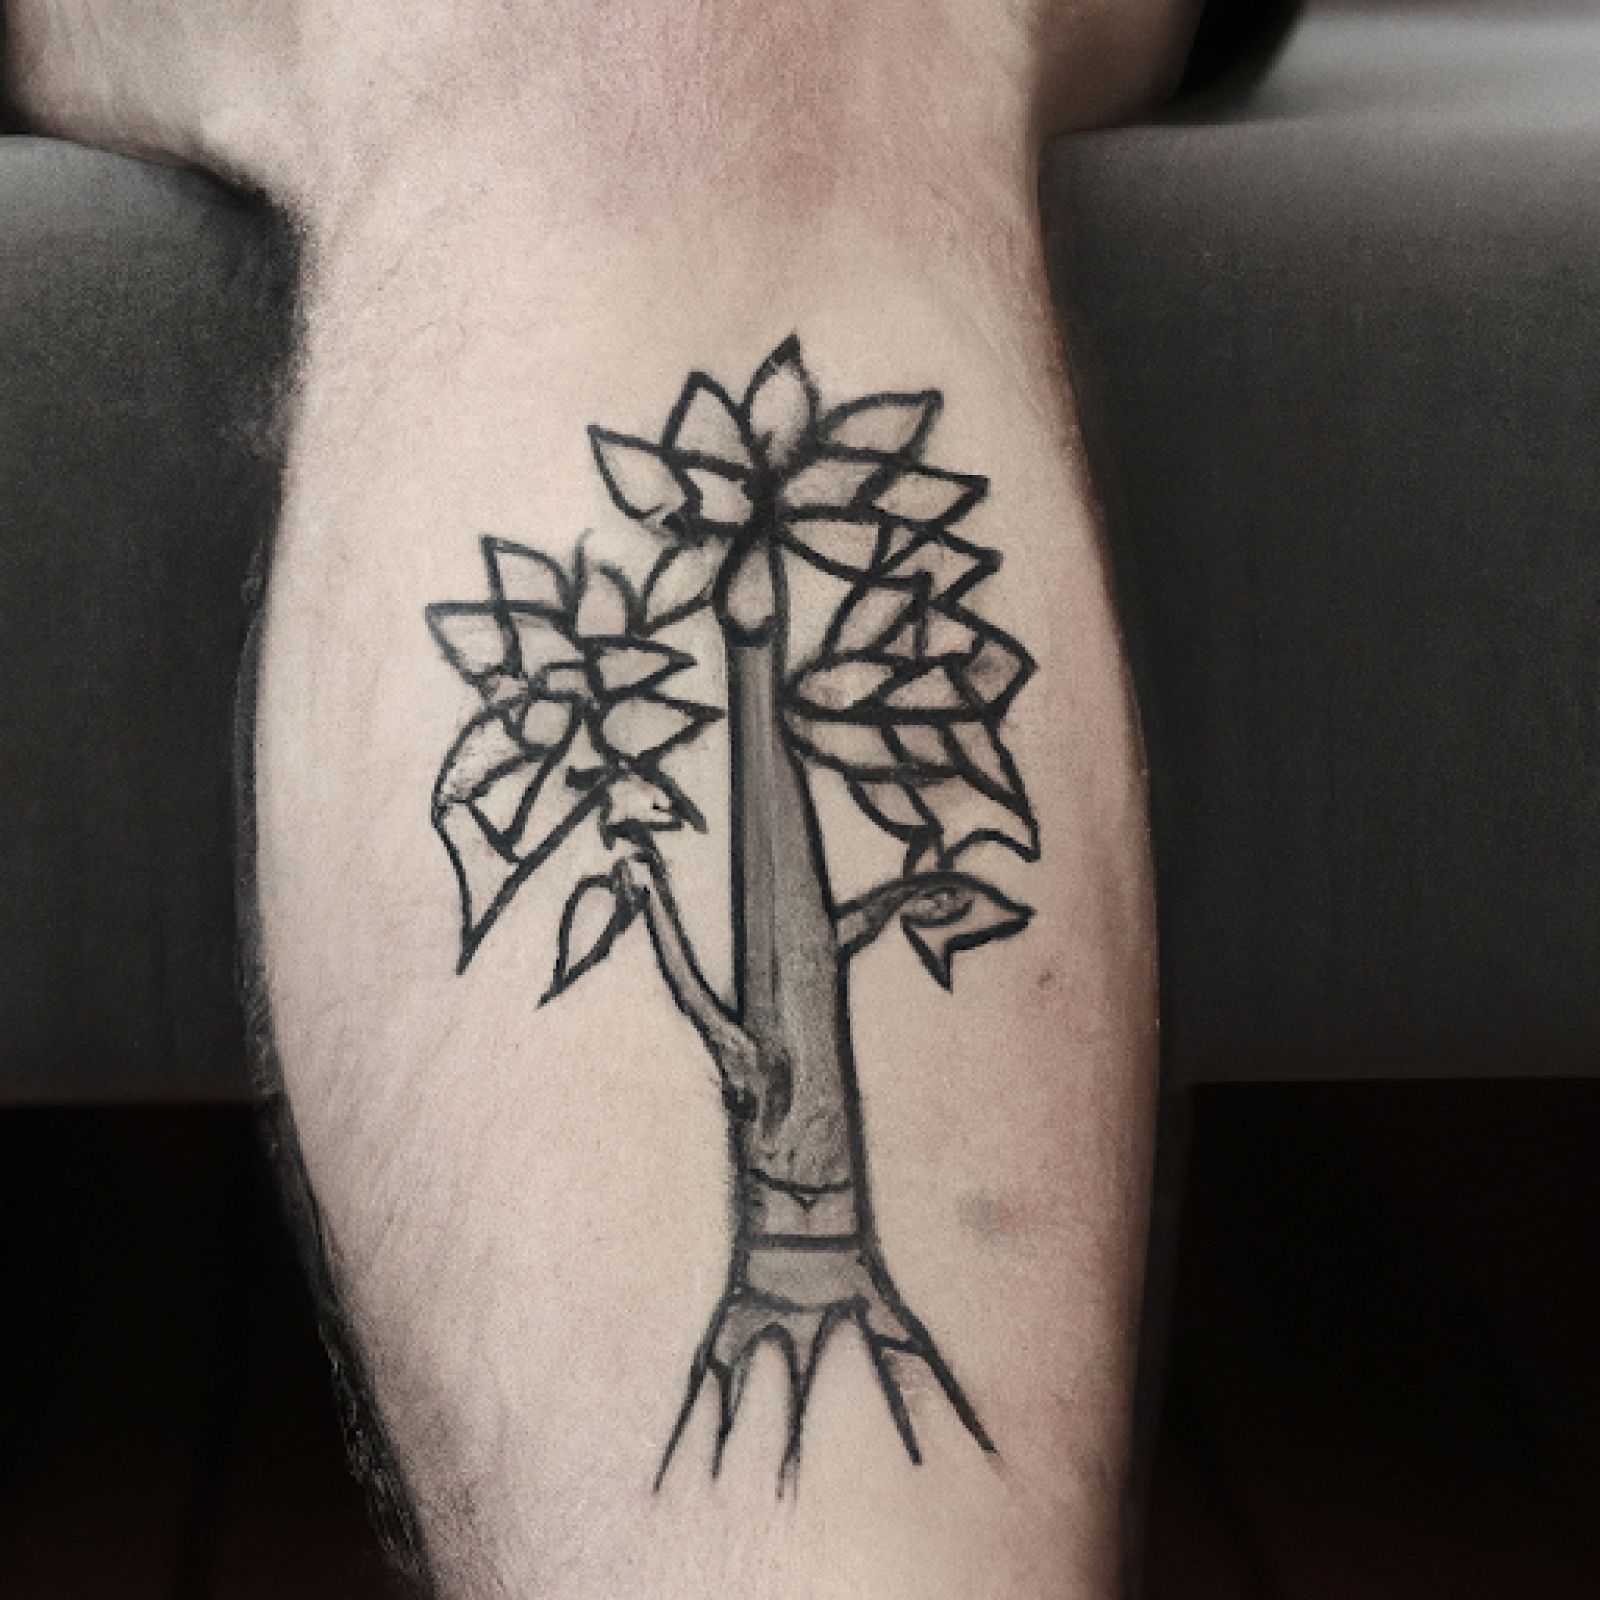 Tree of life tattoo on knee for men